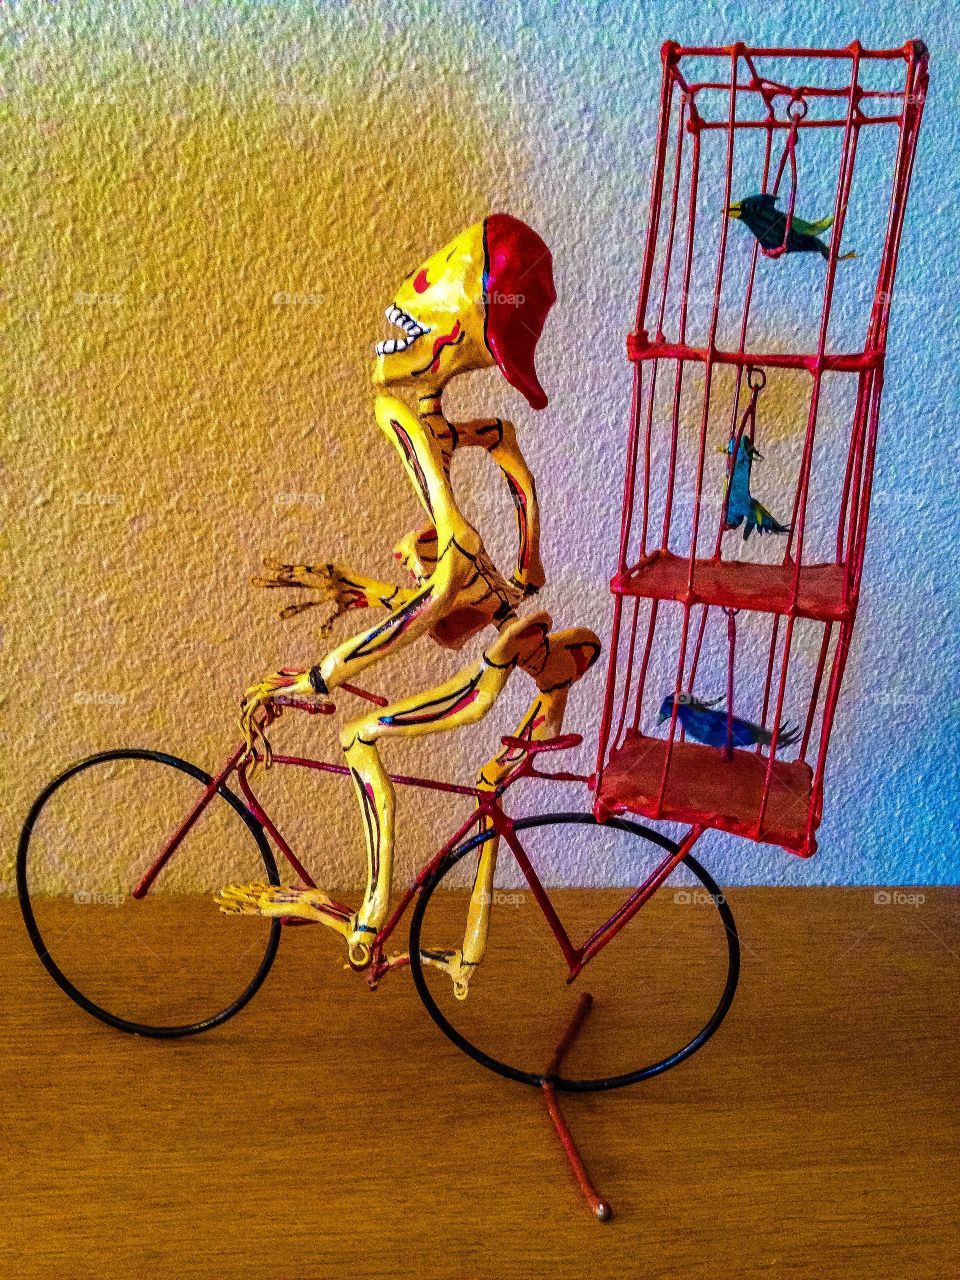 Skeleton on bike